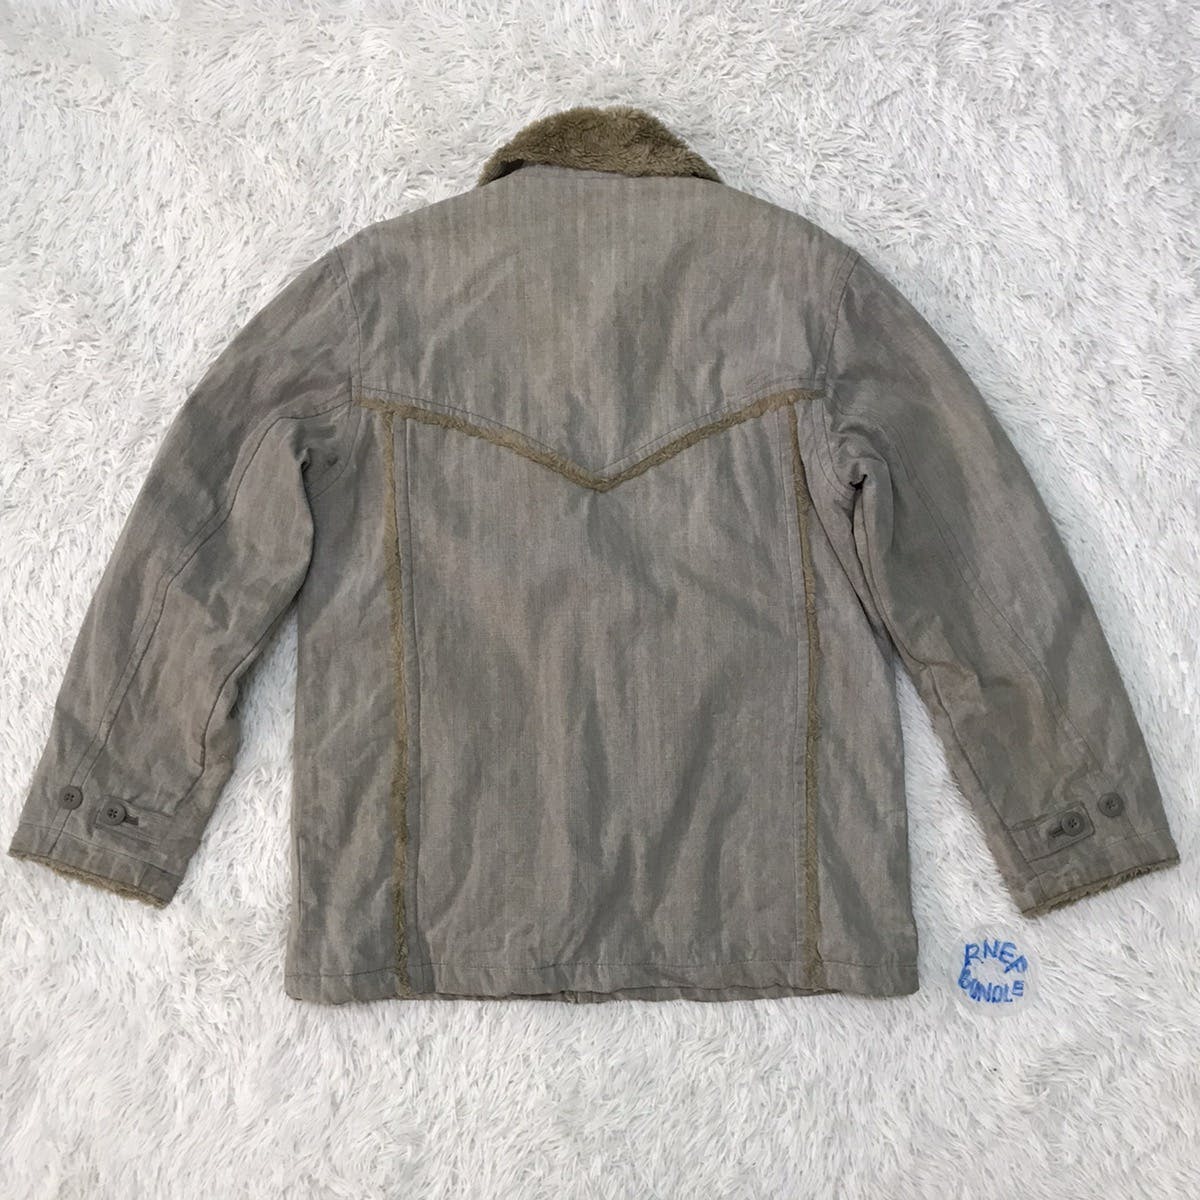 Japanese Brand - Jeaning Garage jacket sherpa inside - 2